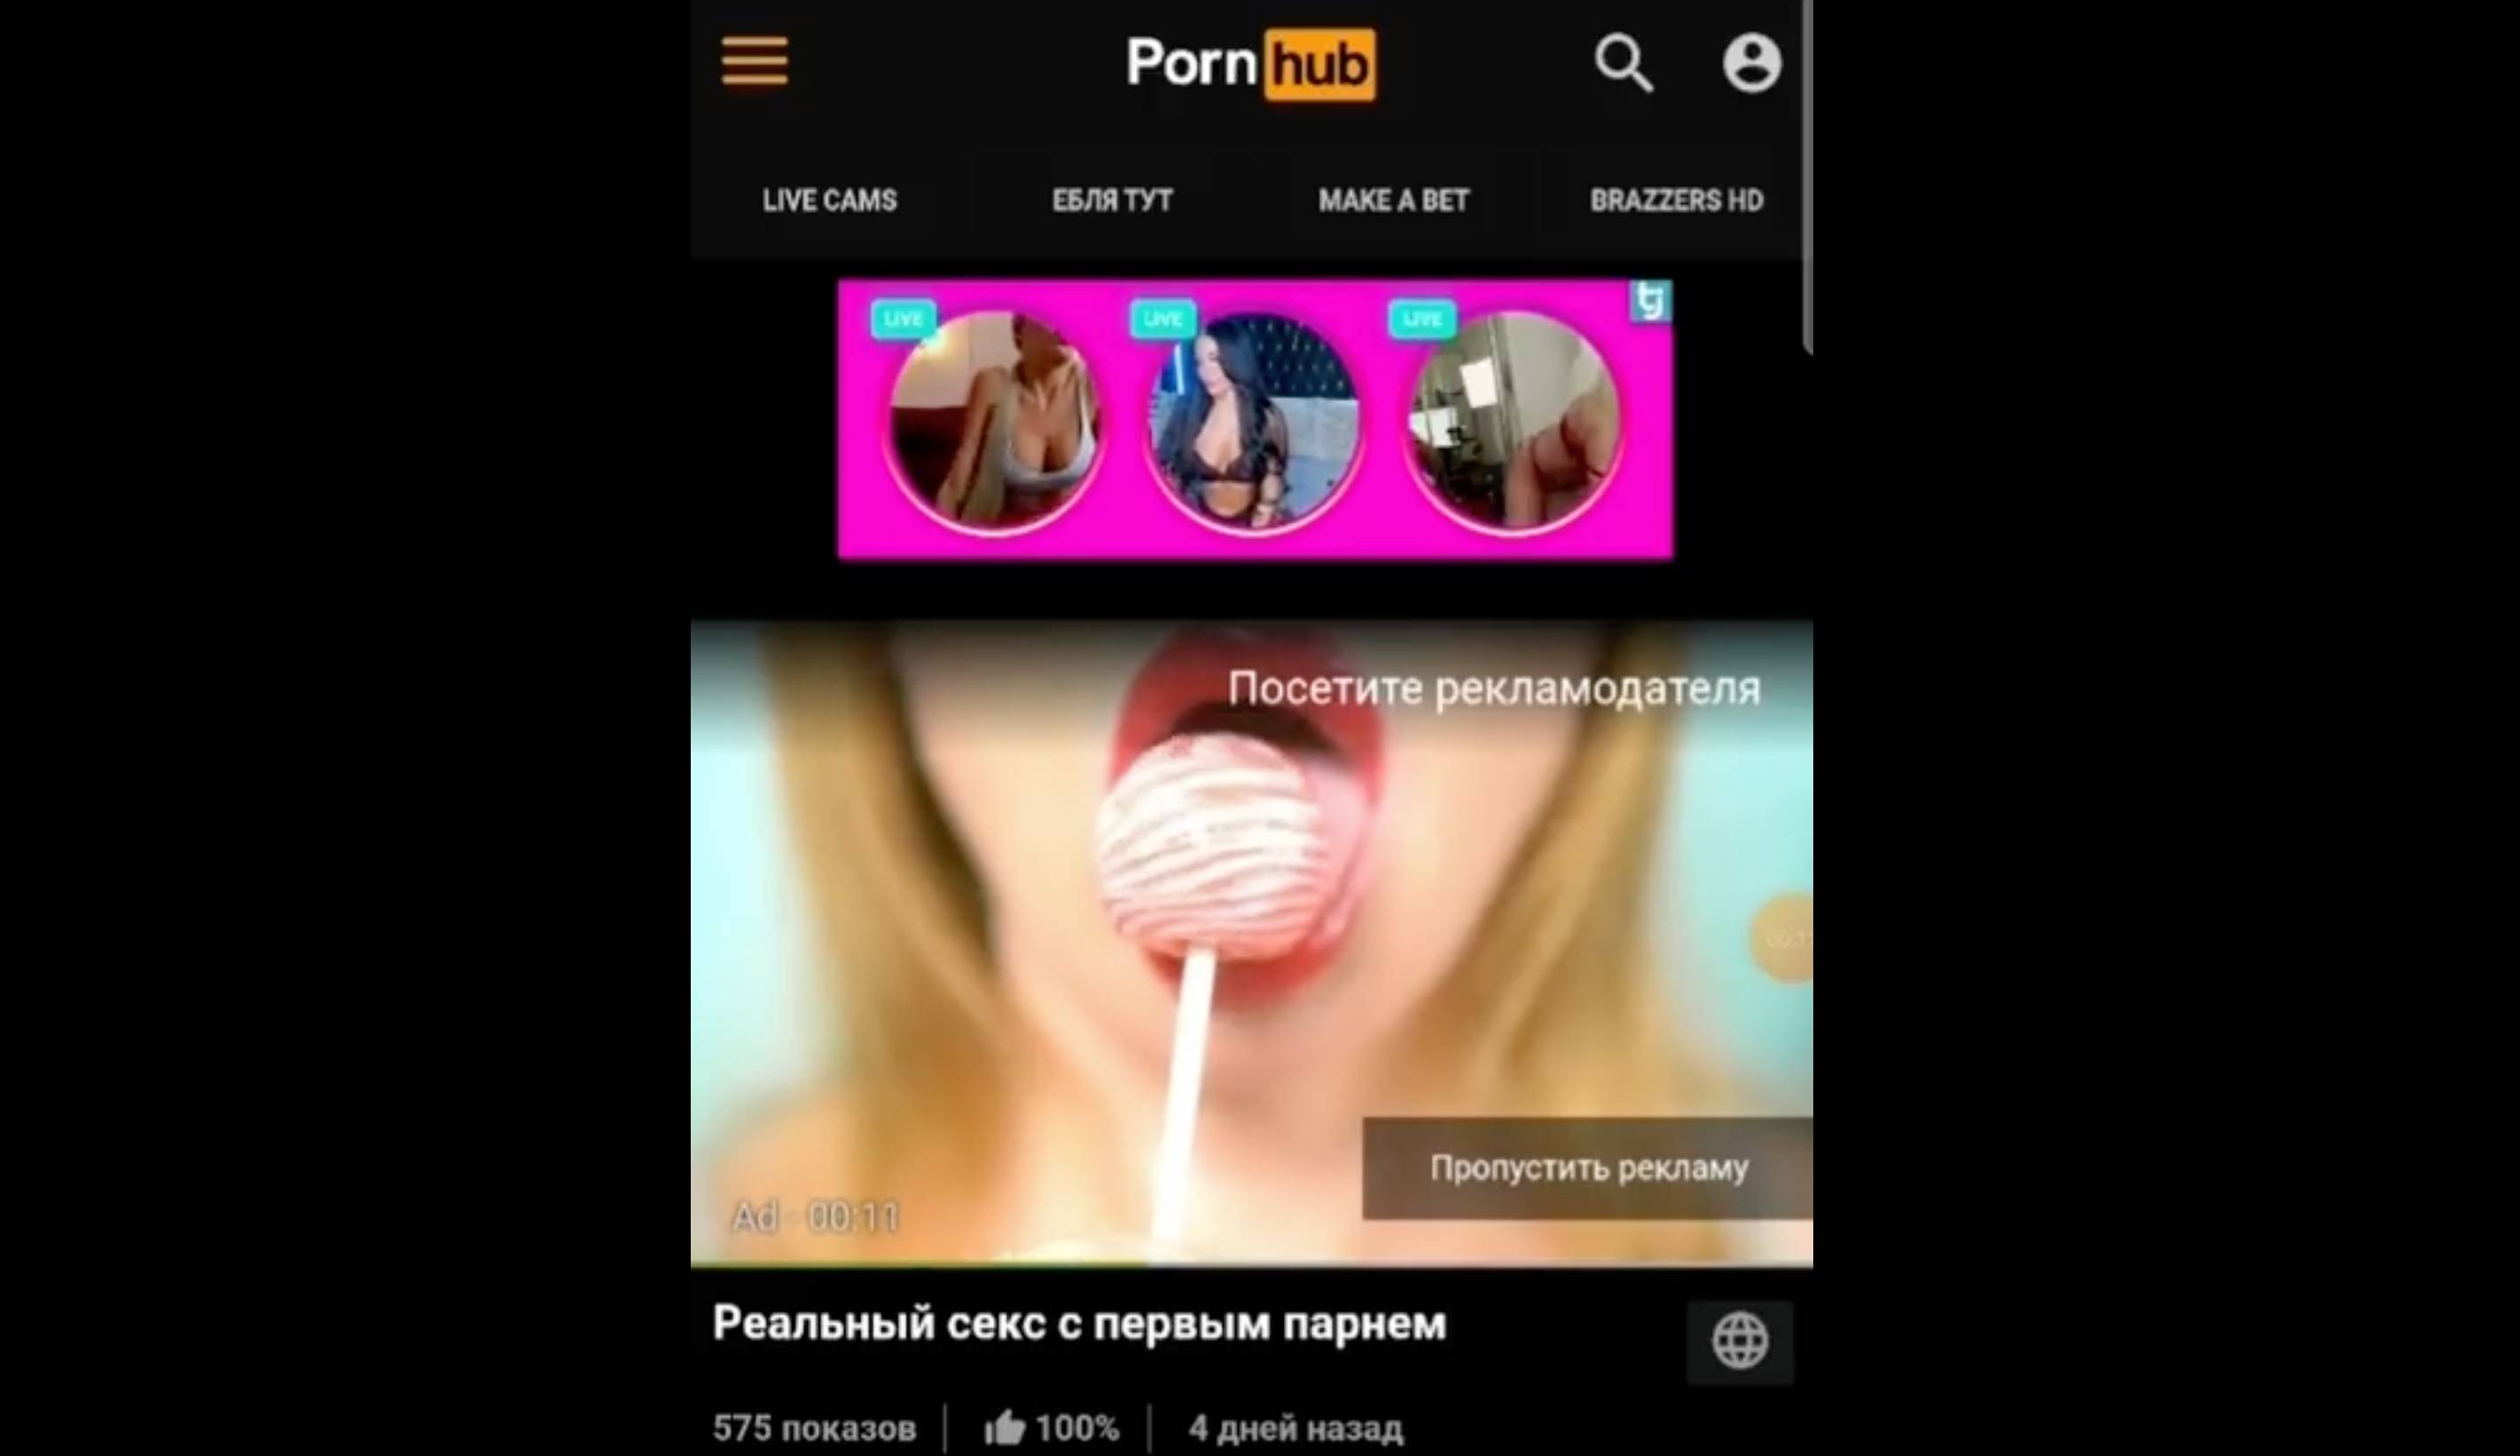 Nudehub - Notorious Russian Mercenaries Wagner Are Advertising on Pornhub